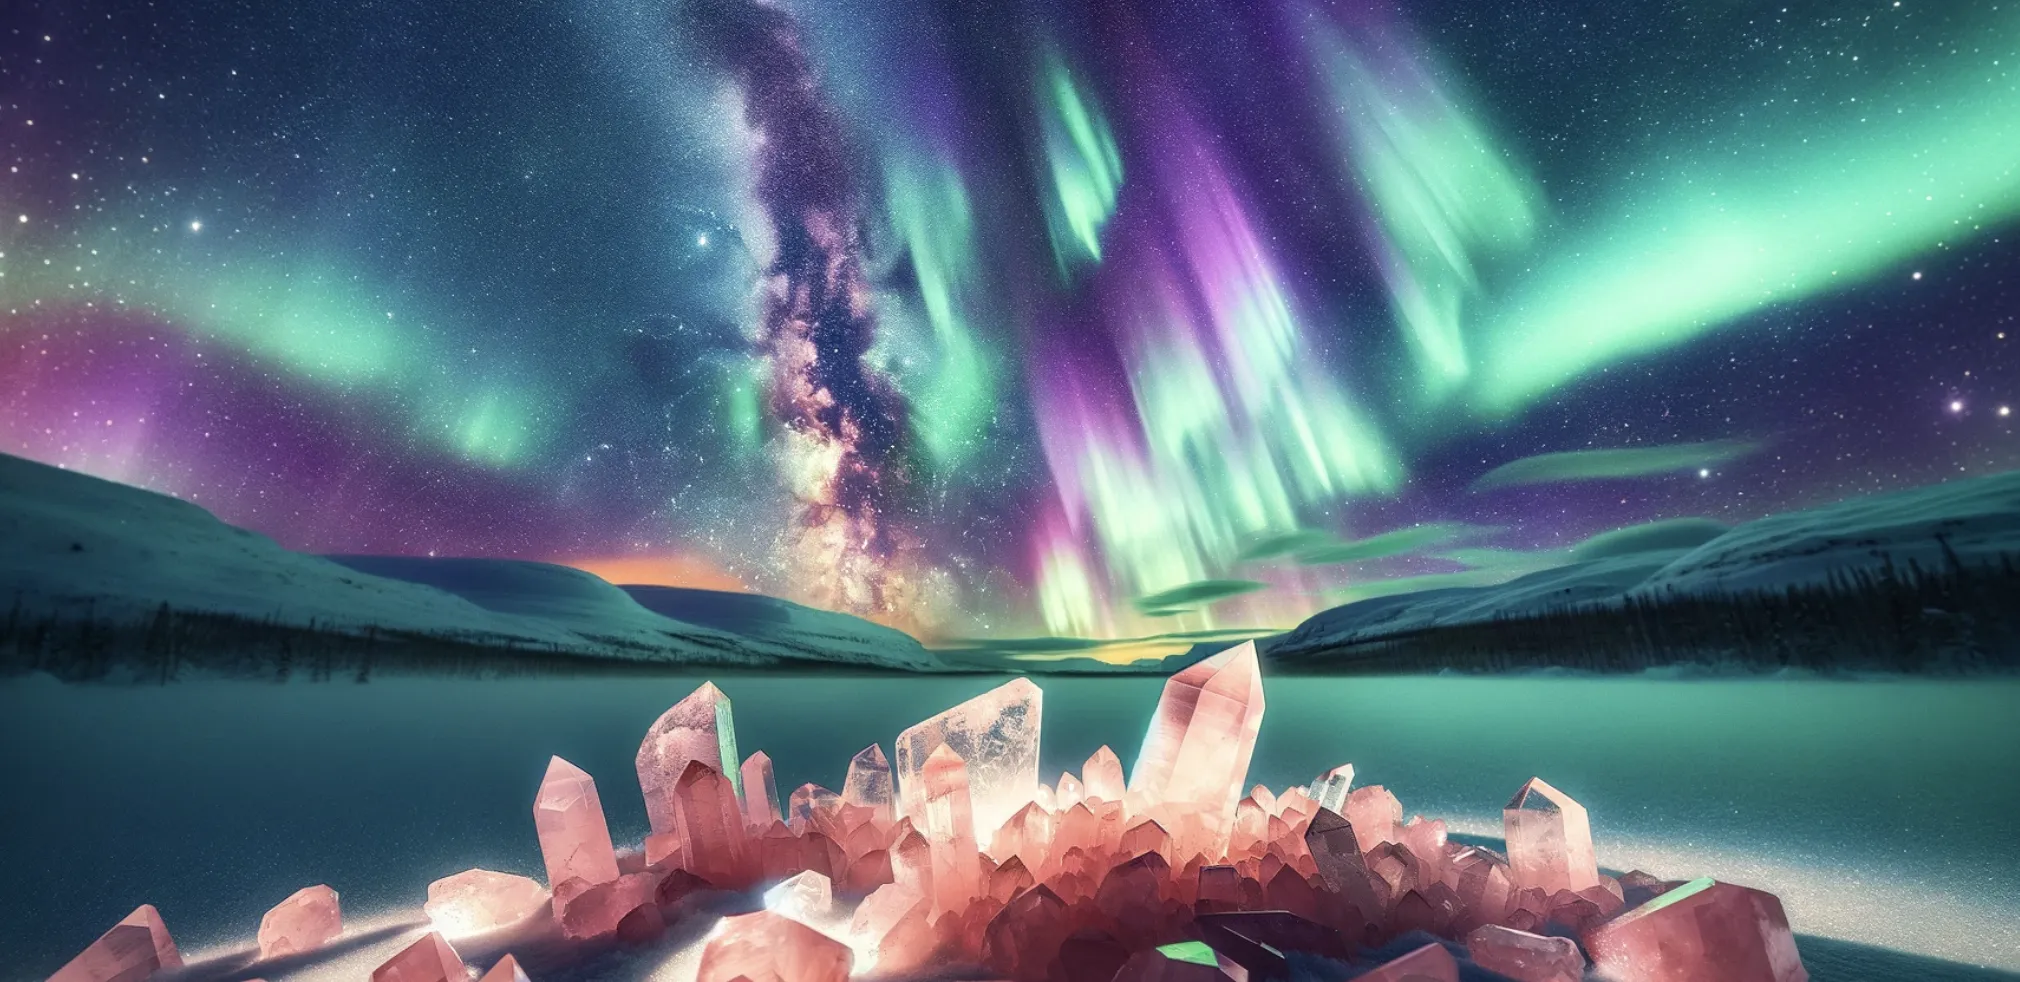 Rose Quartz Crystals below the Aurora Borealis